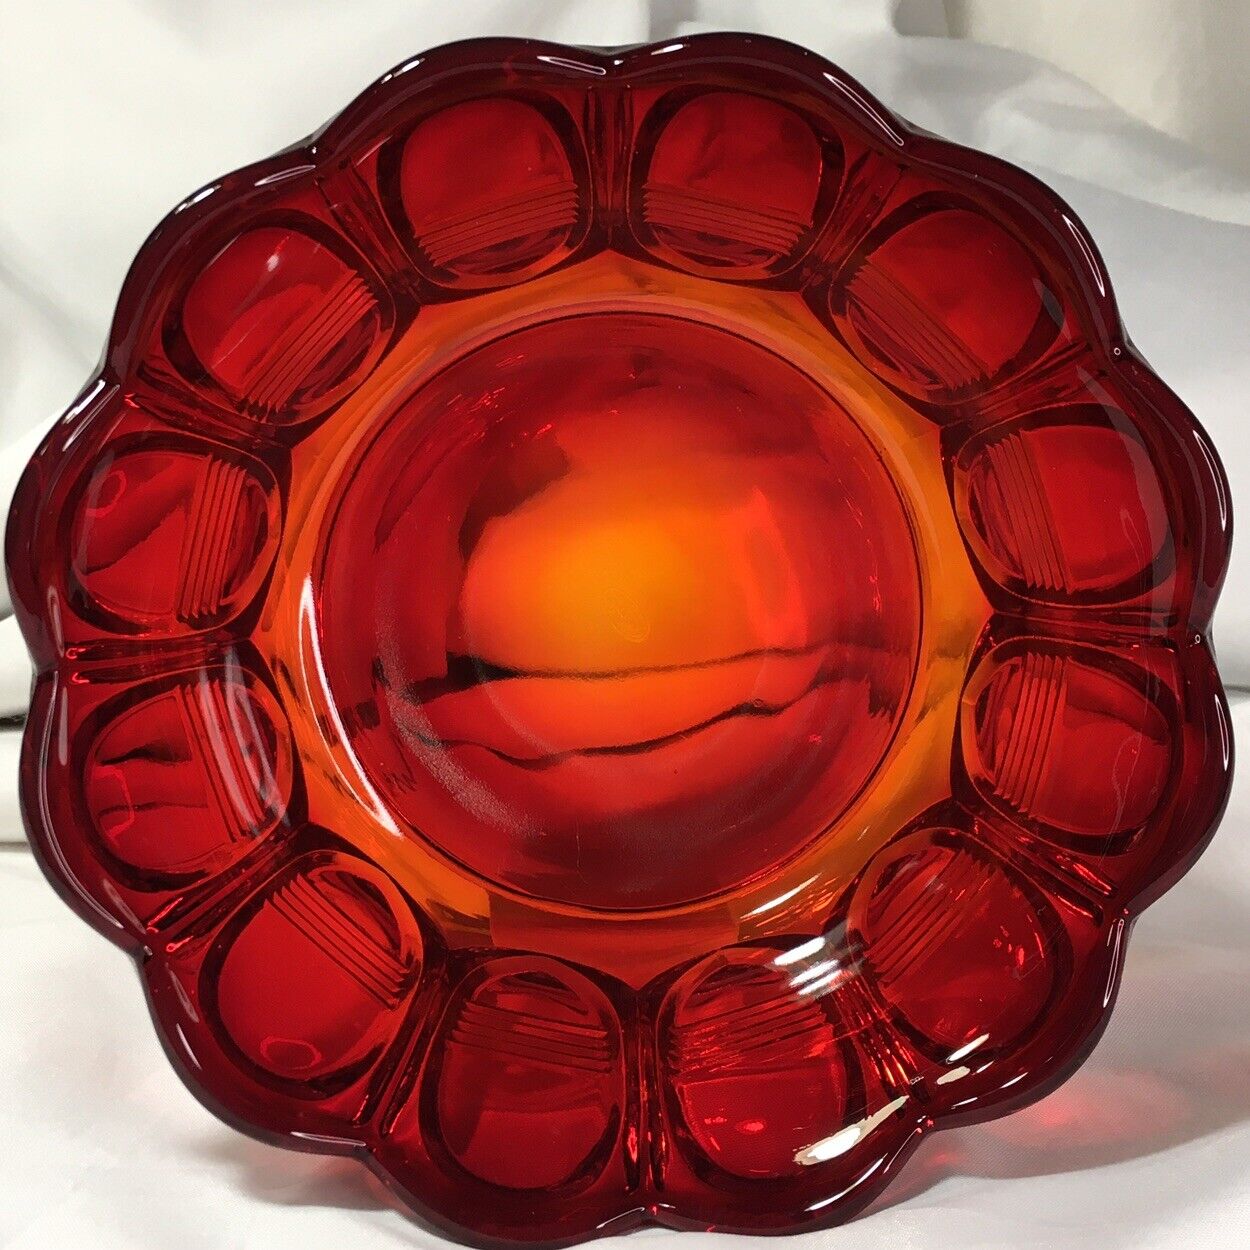 6” Fenton Amberina Art Glass Bowl, Scalloped Edge, Ruby Tones, Vintage Collect❤️